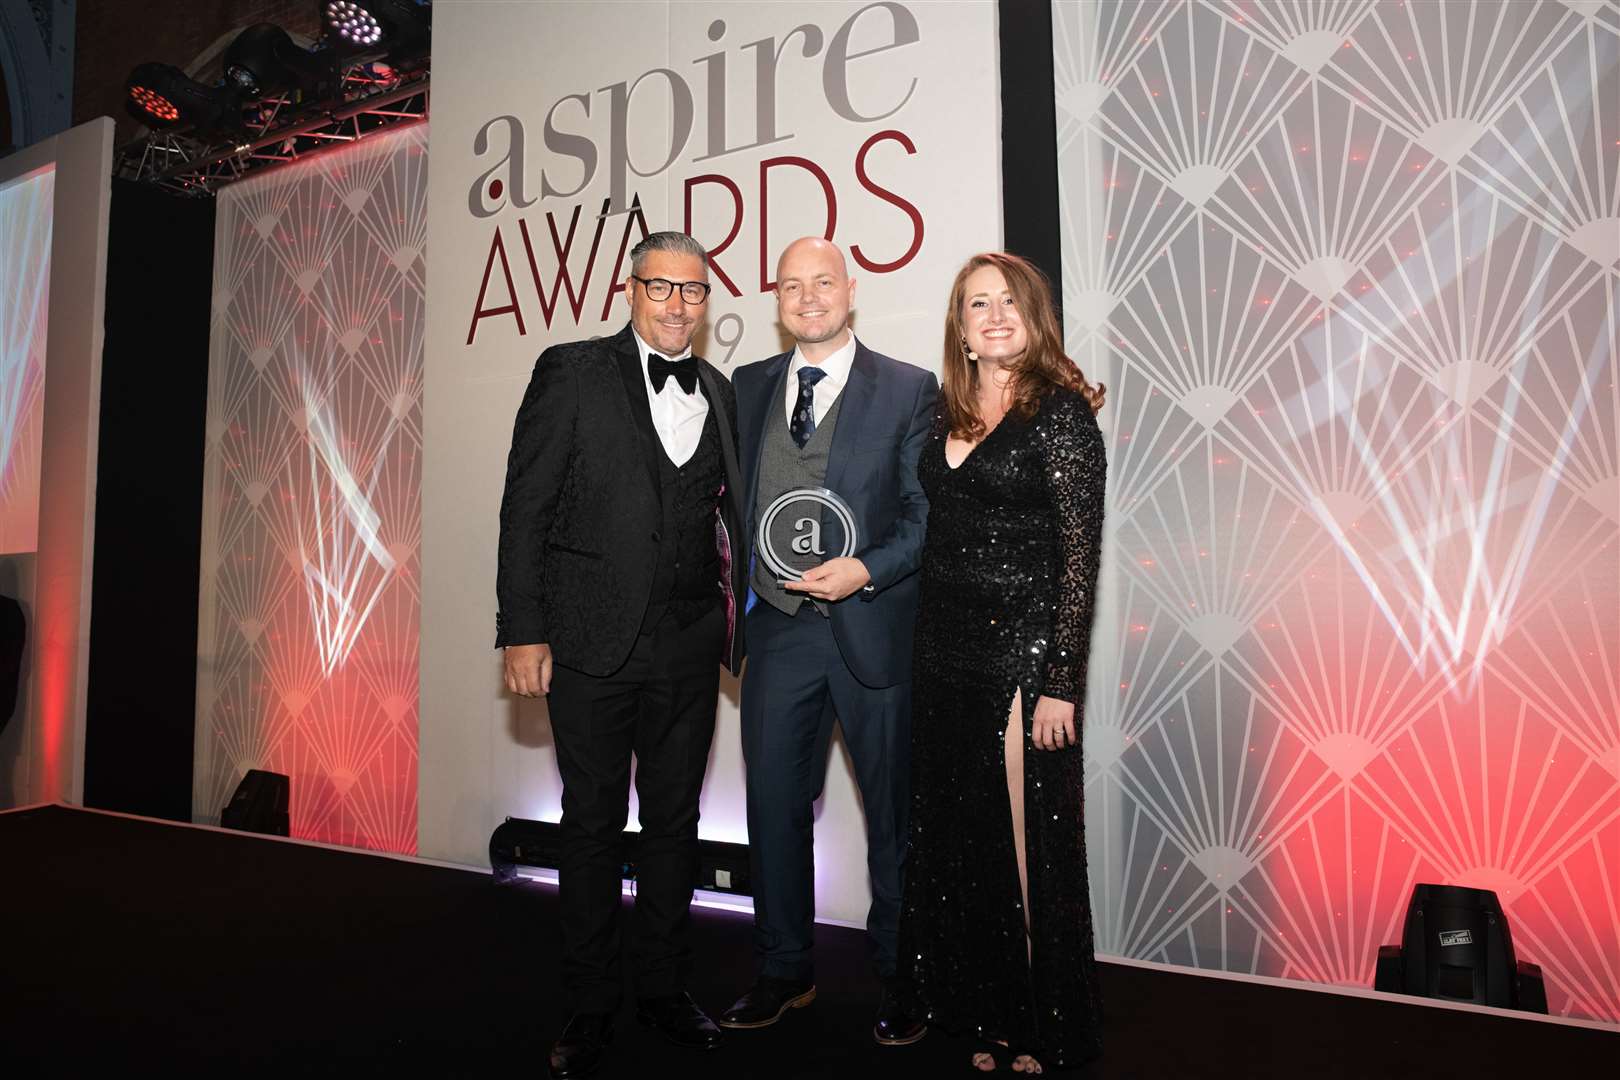 Jamie Revell, centre, picks up his Aspire Award in London